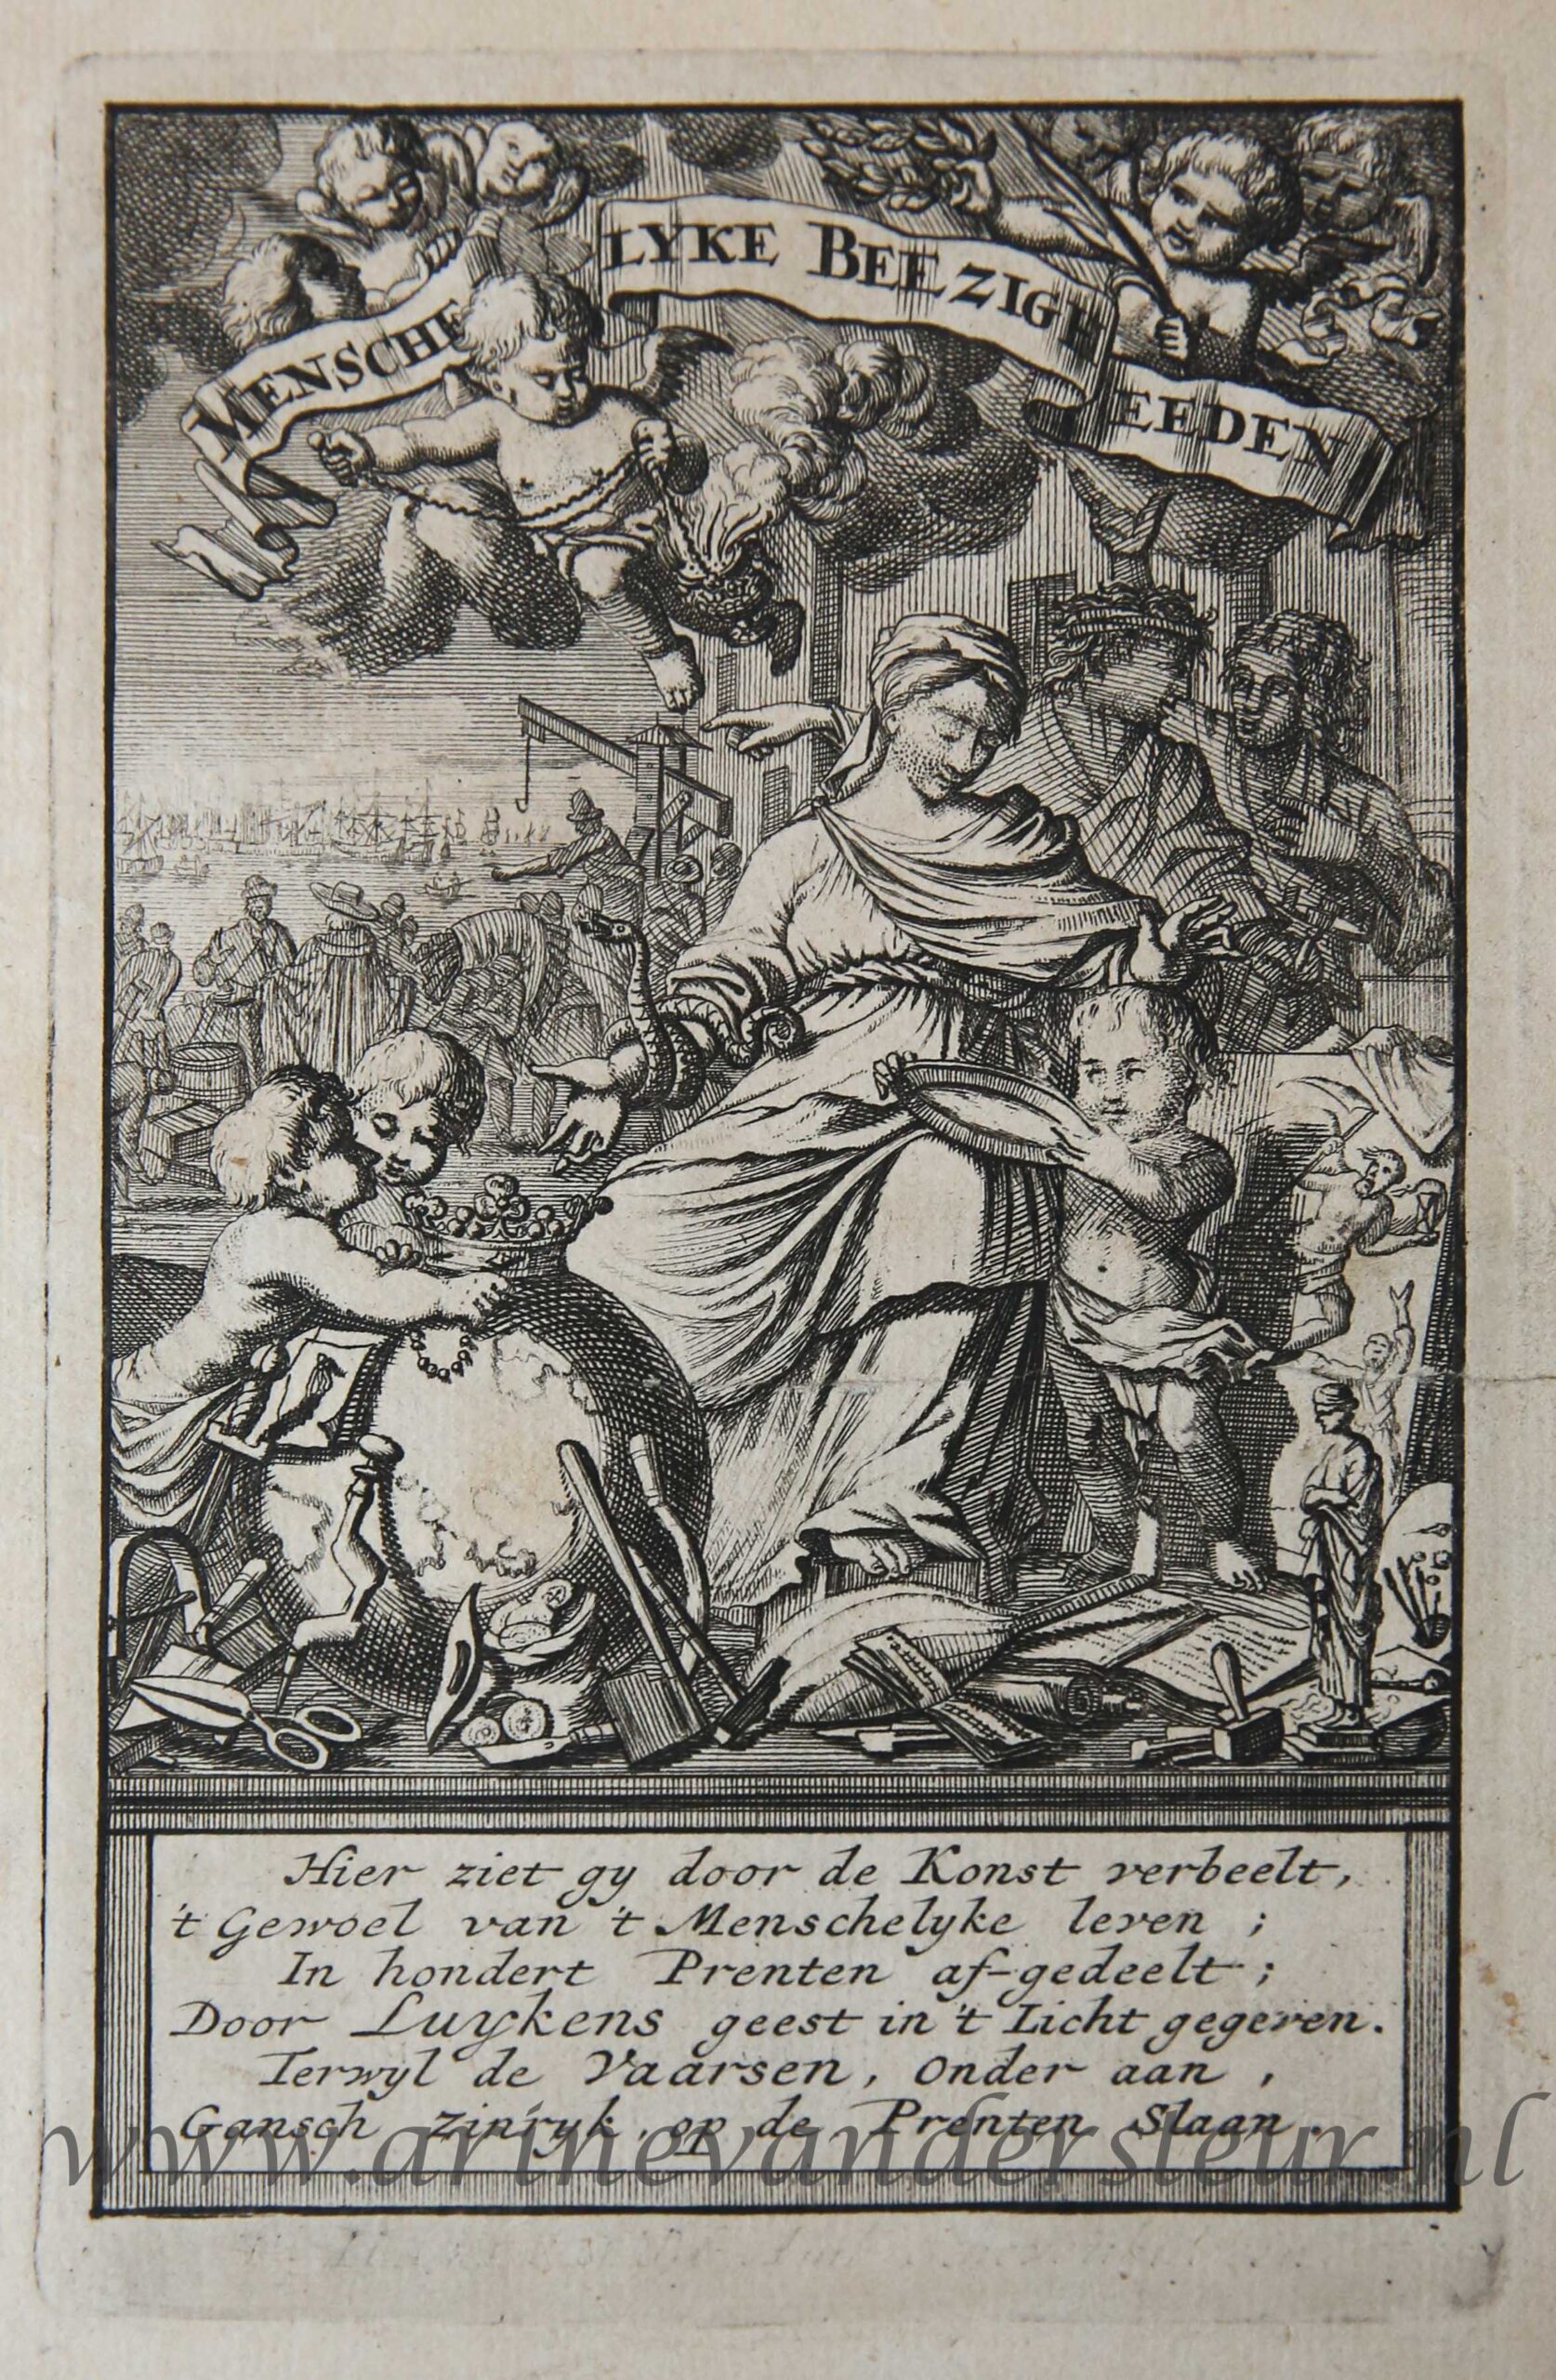 [Antique title page, 1695 or 1751] MENSCHELYKE BEEZIGHEEDEN, published 1695 or 1751, 1 p.